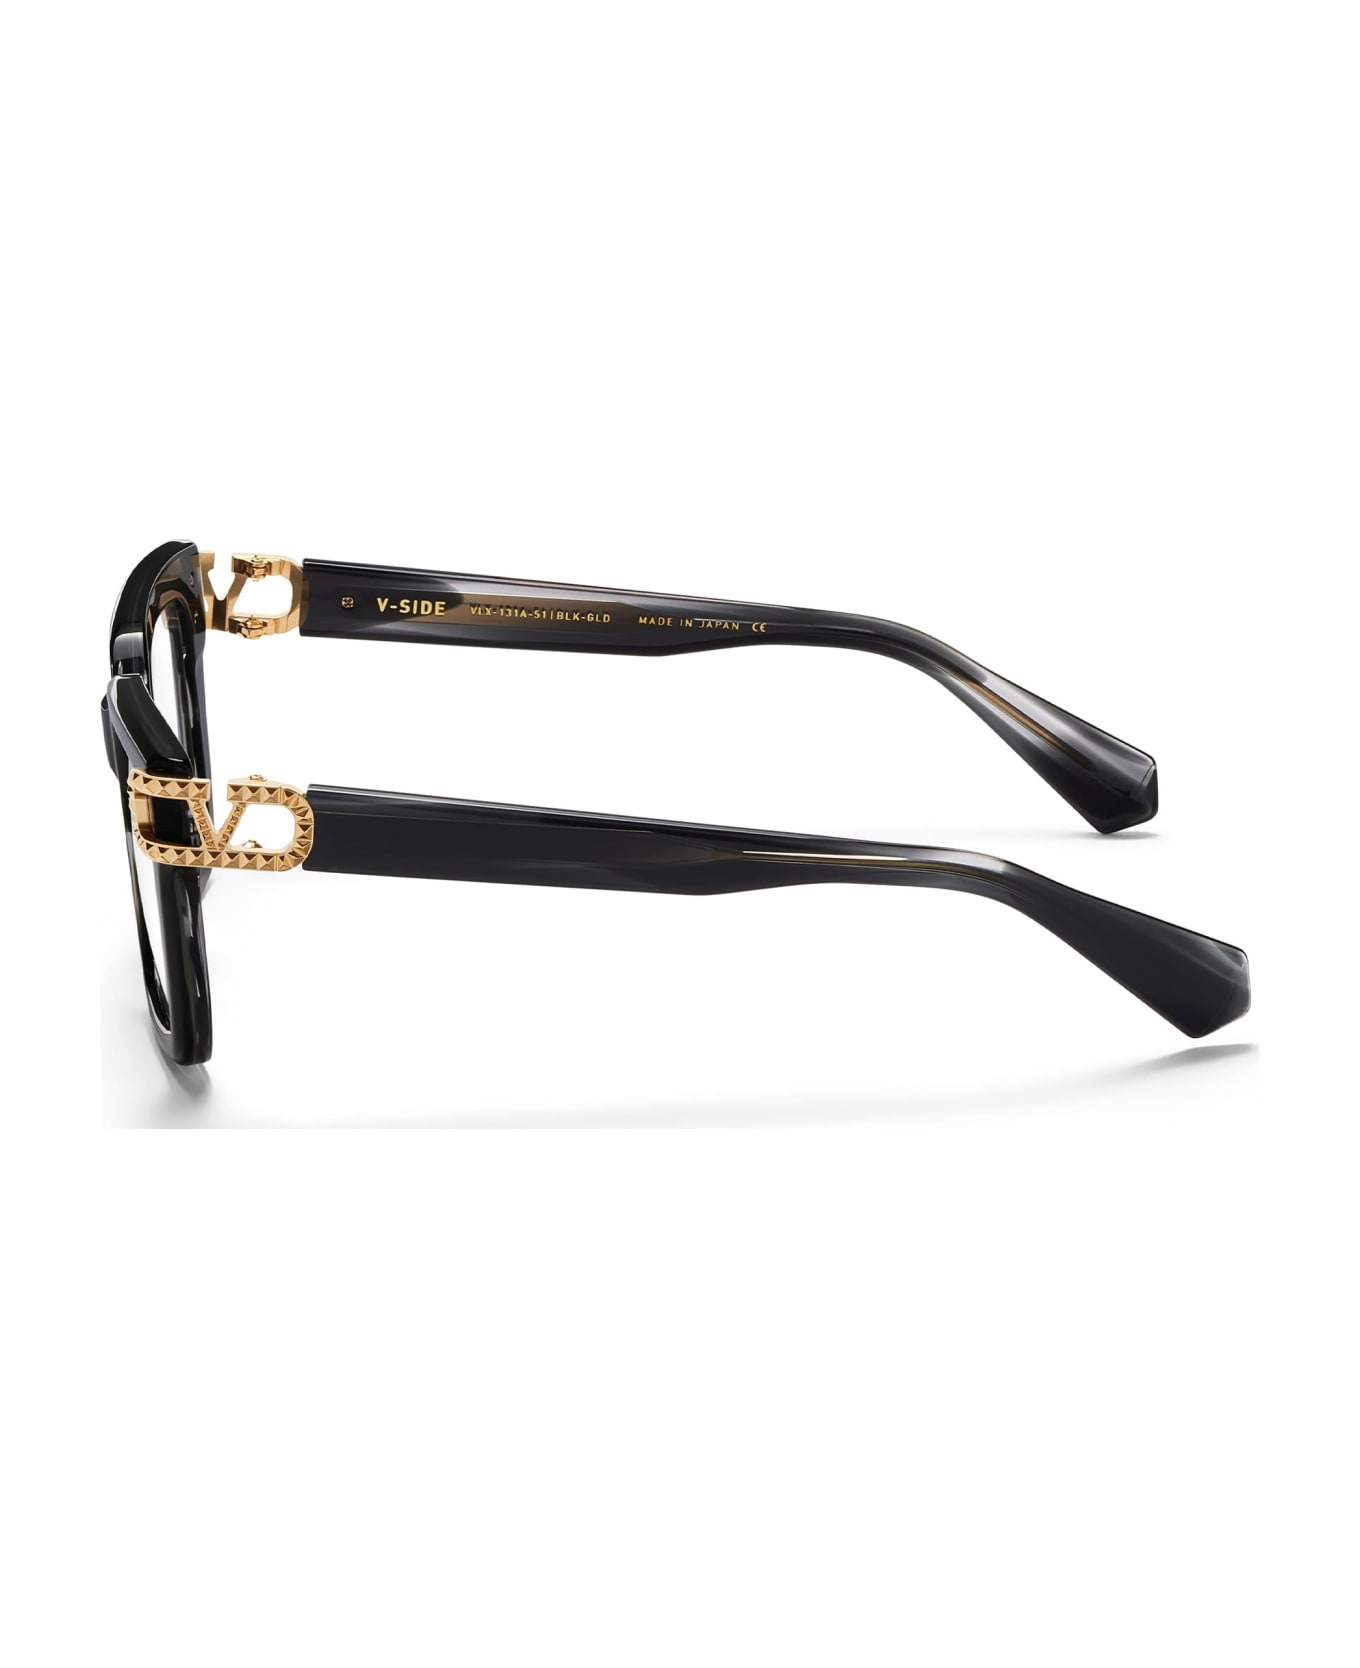 Valentino Eyewear V-side - Black Swirl / Light Gold Glasses - Black